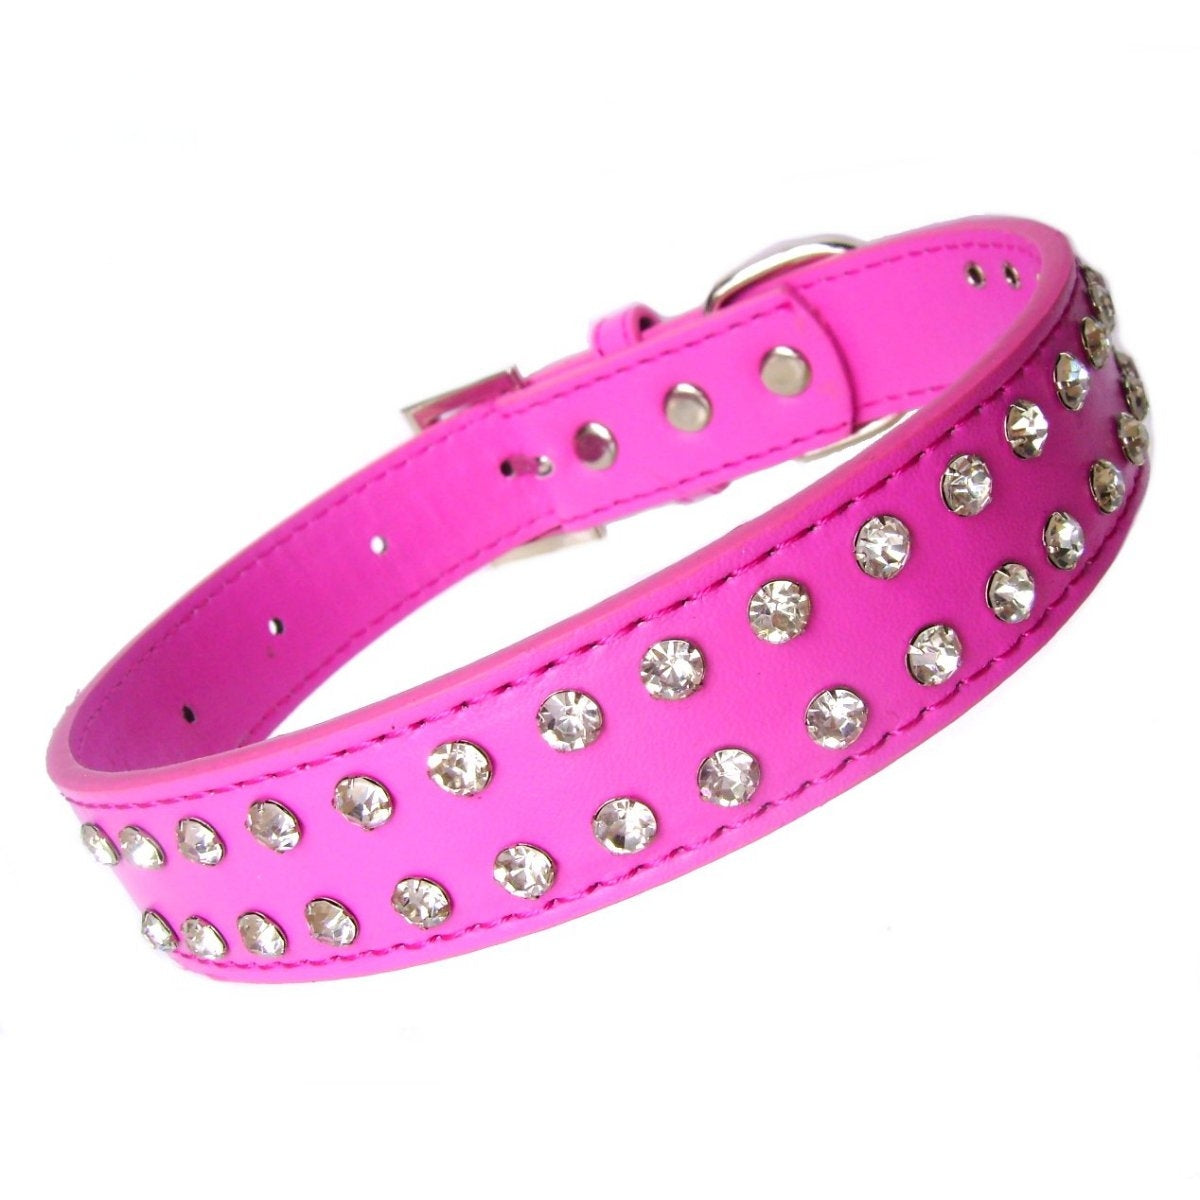 2-Row Dog Collars 10-20" - Pink